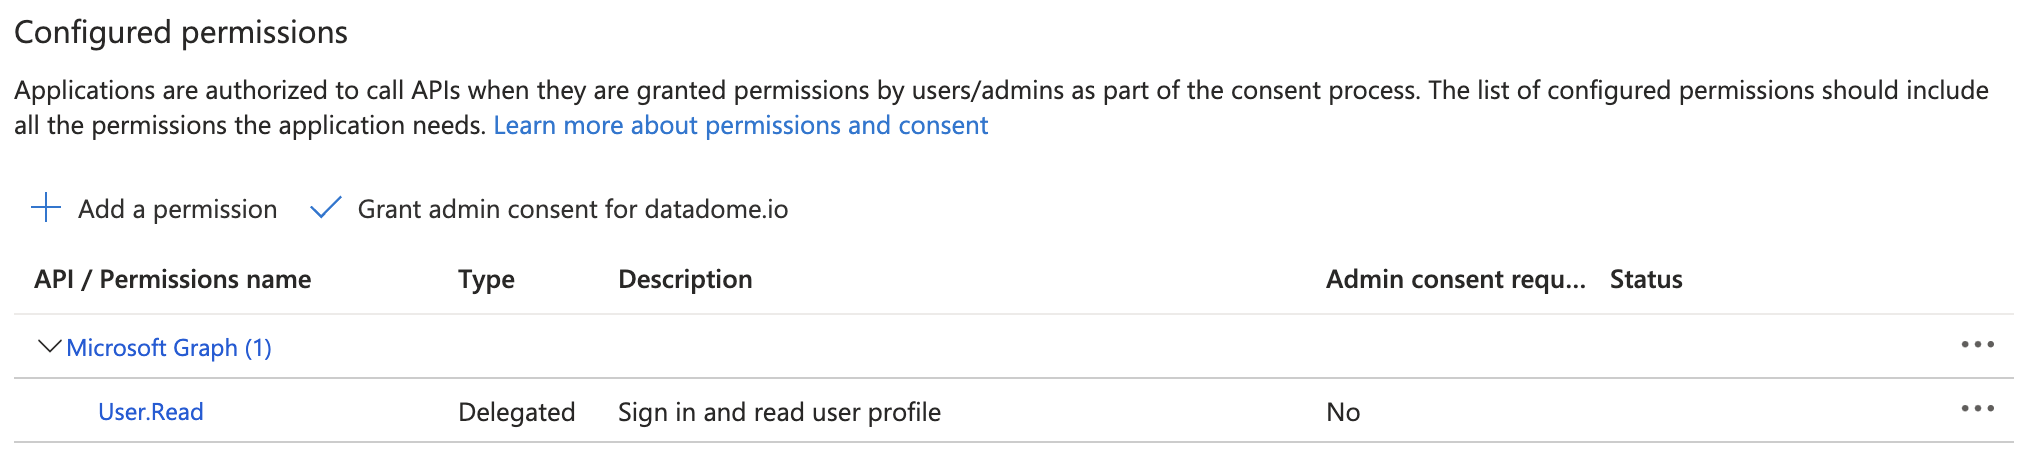 API permissions of Azure AD app (accessible via left navigation panel)